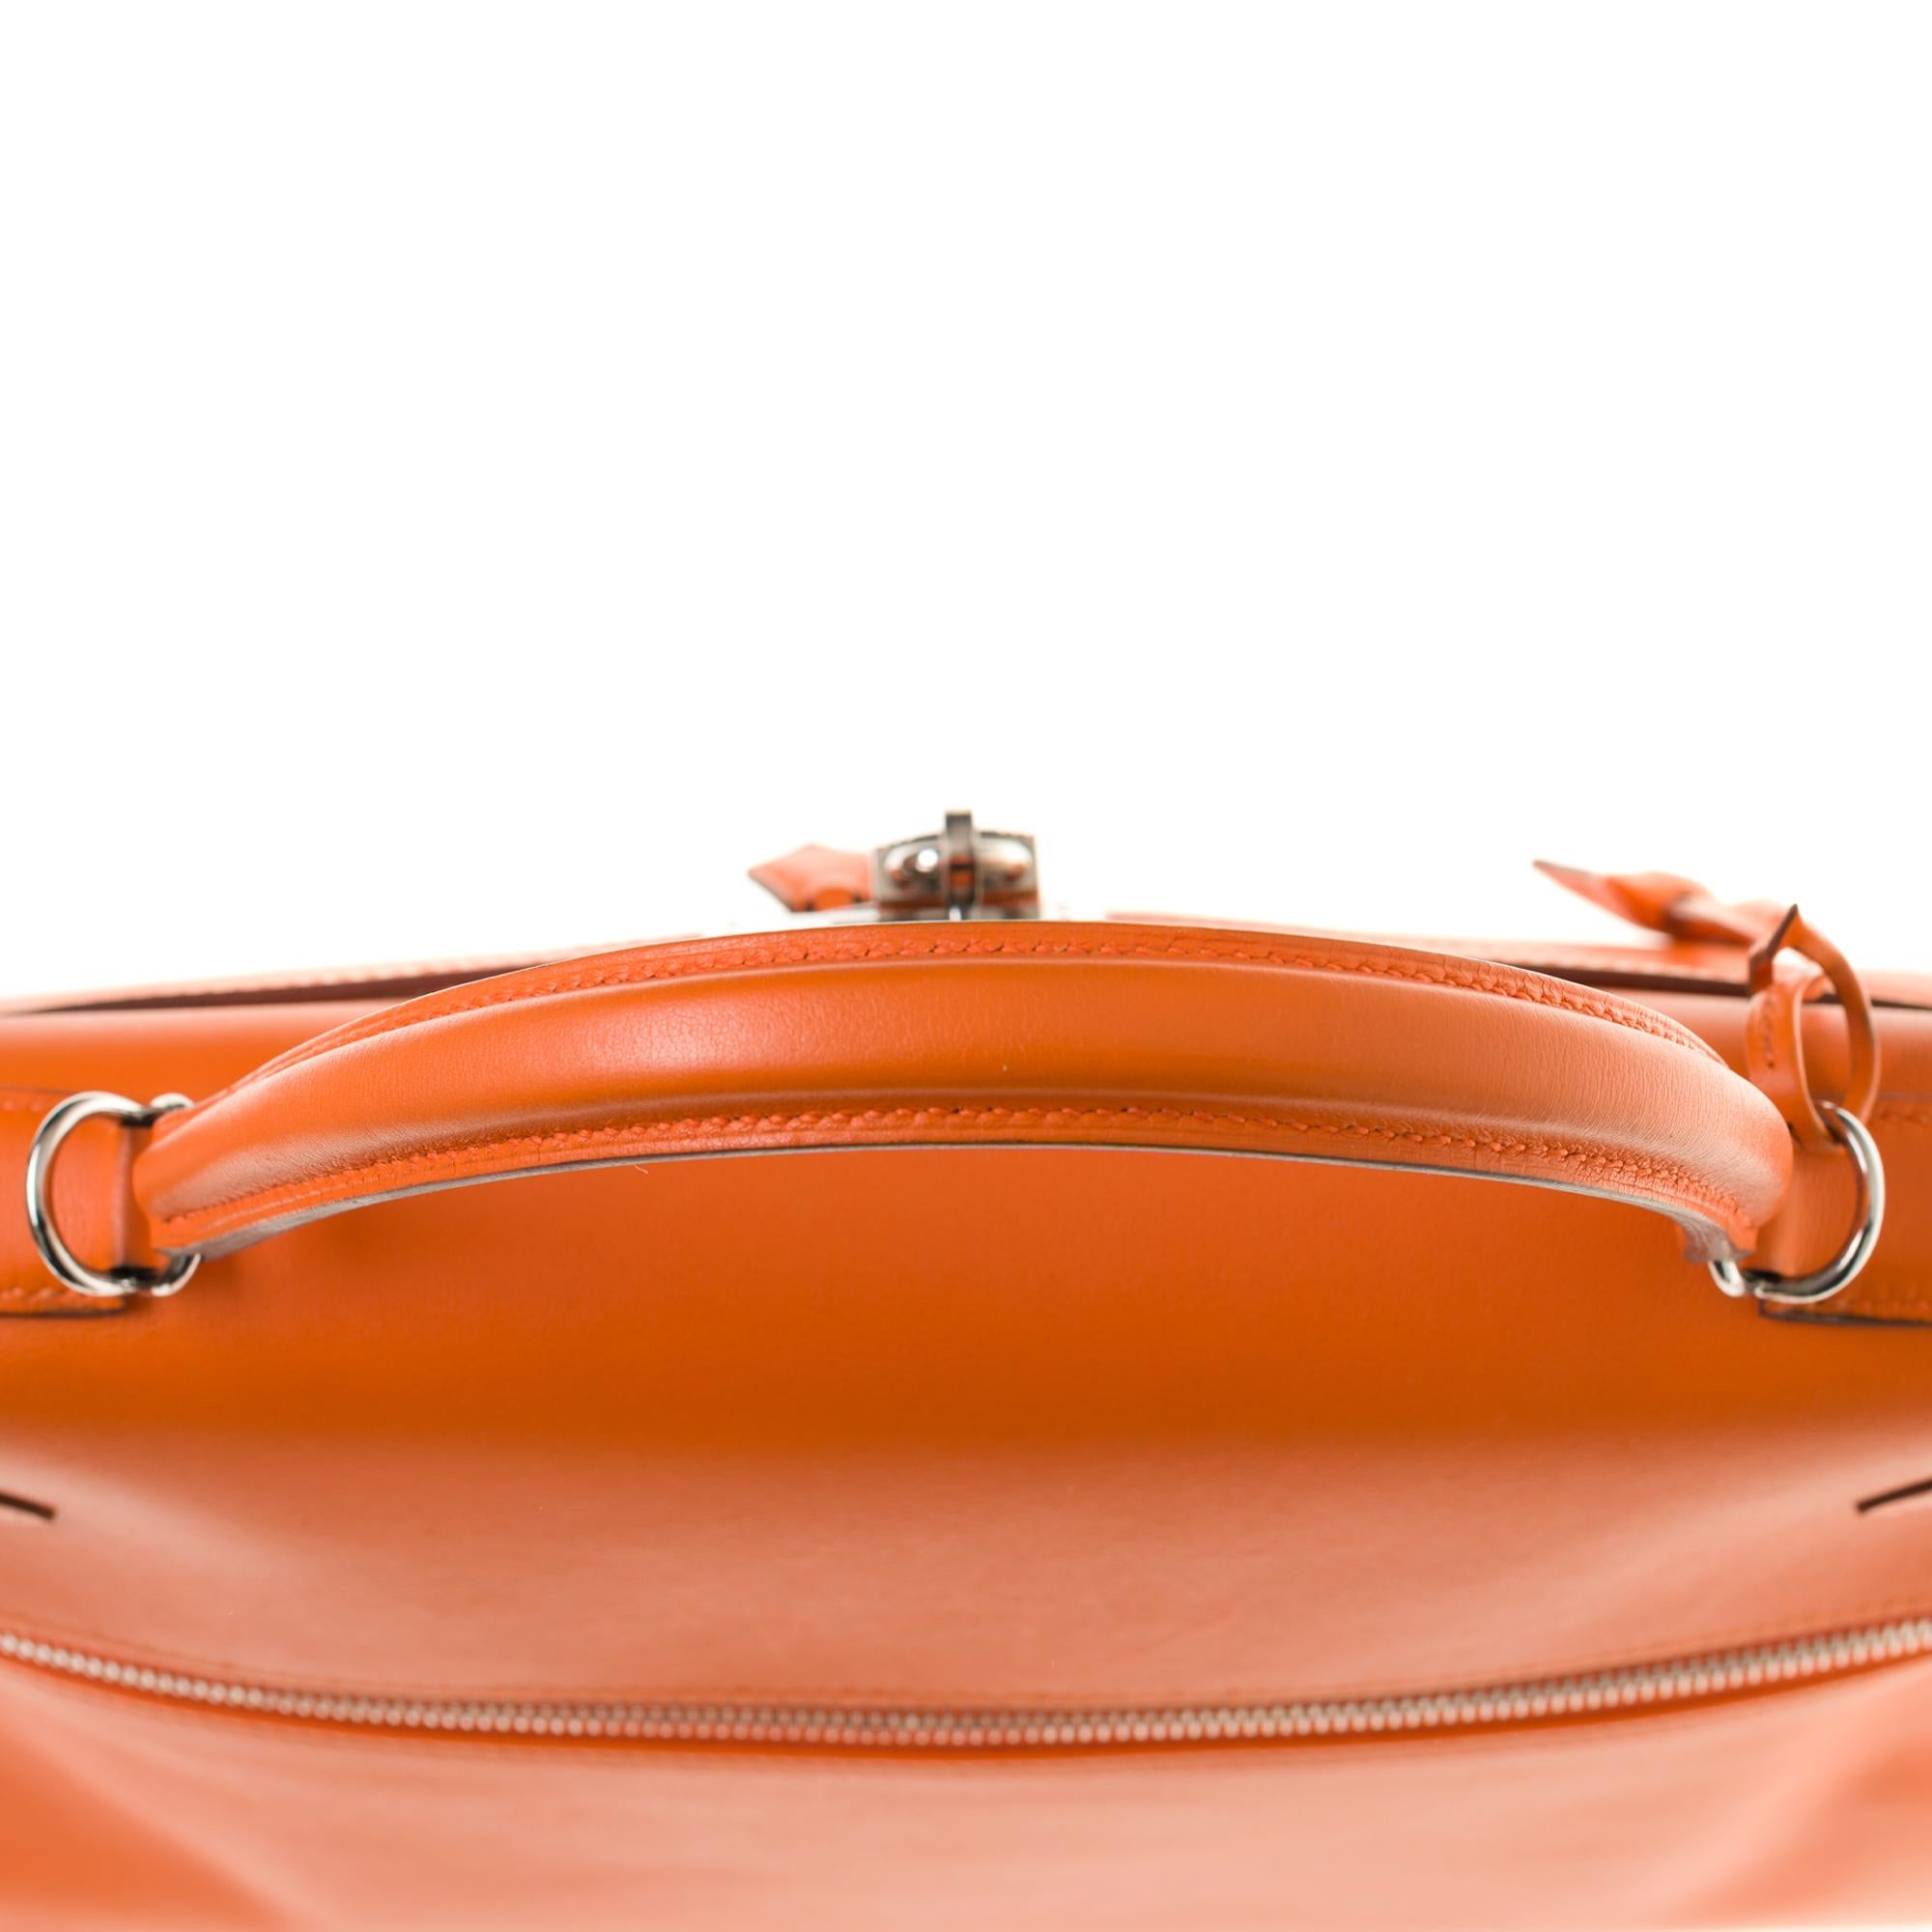 Rare Hermès Kelly Lakis 35 handbag with strap in orange swift calf leather, PHW 1